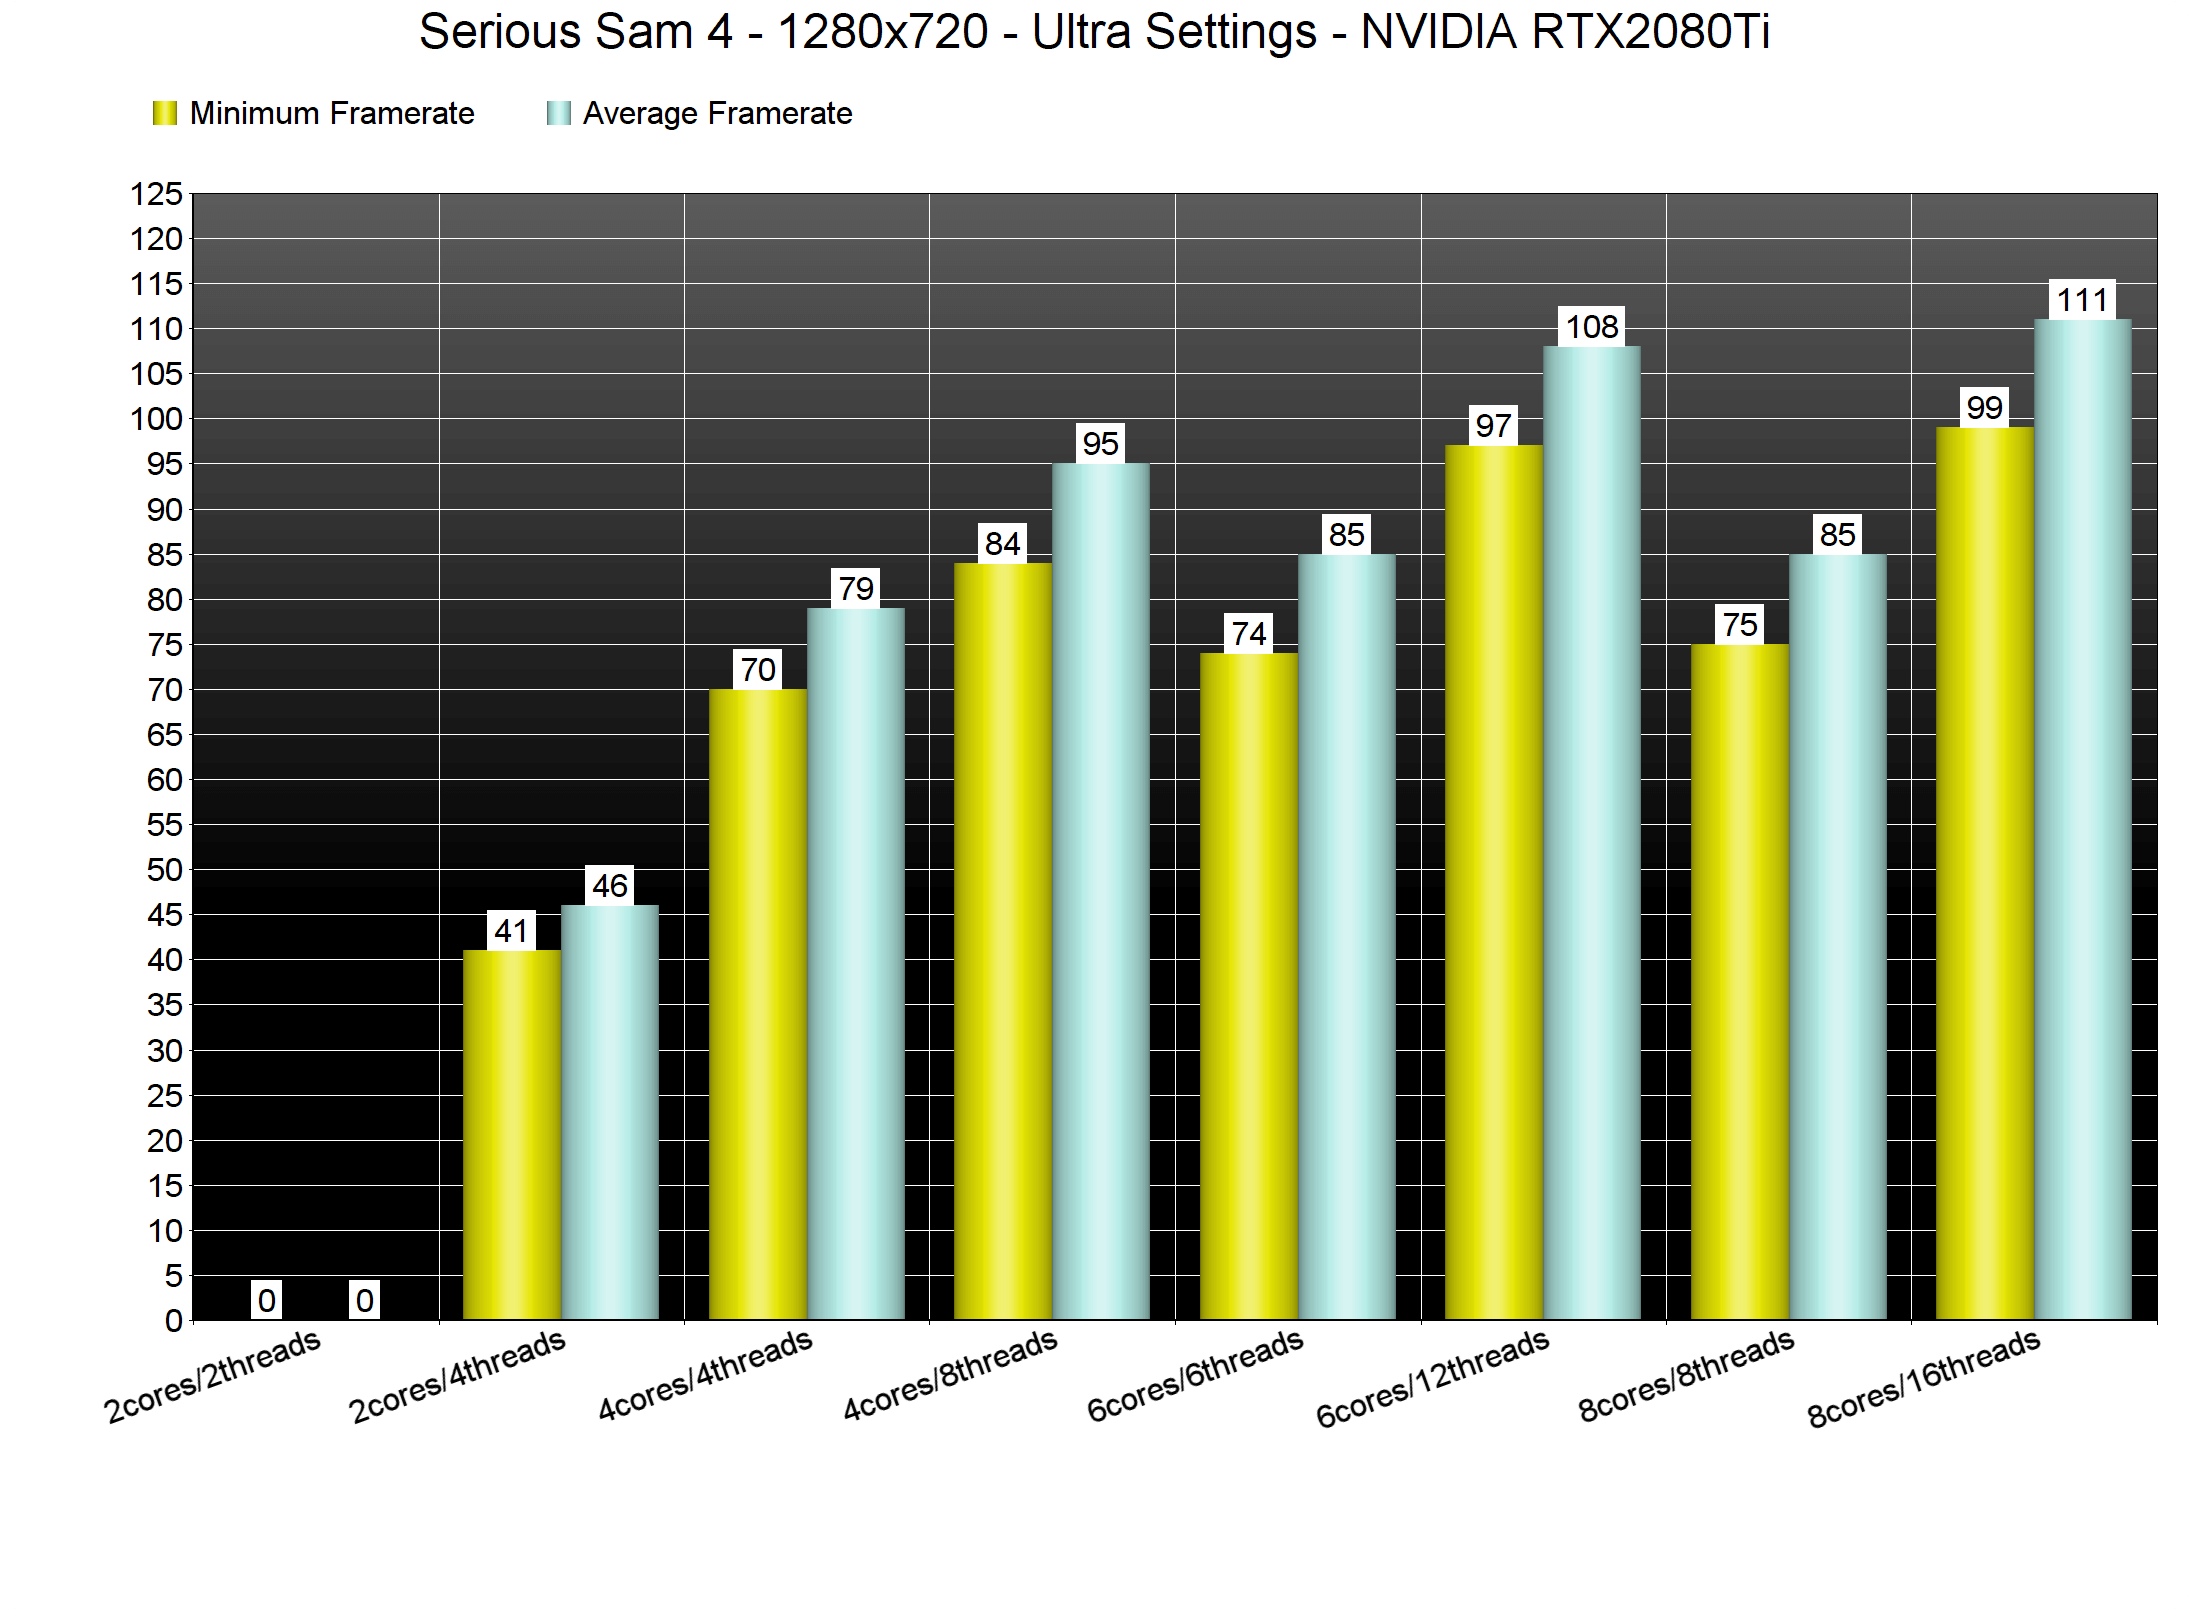 GPU Performance Test 2020/2021: 20 games, 15 GPU's, 4 resolutions -  in-depth benchmarking